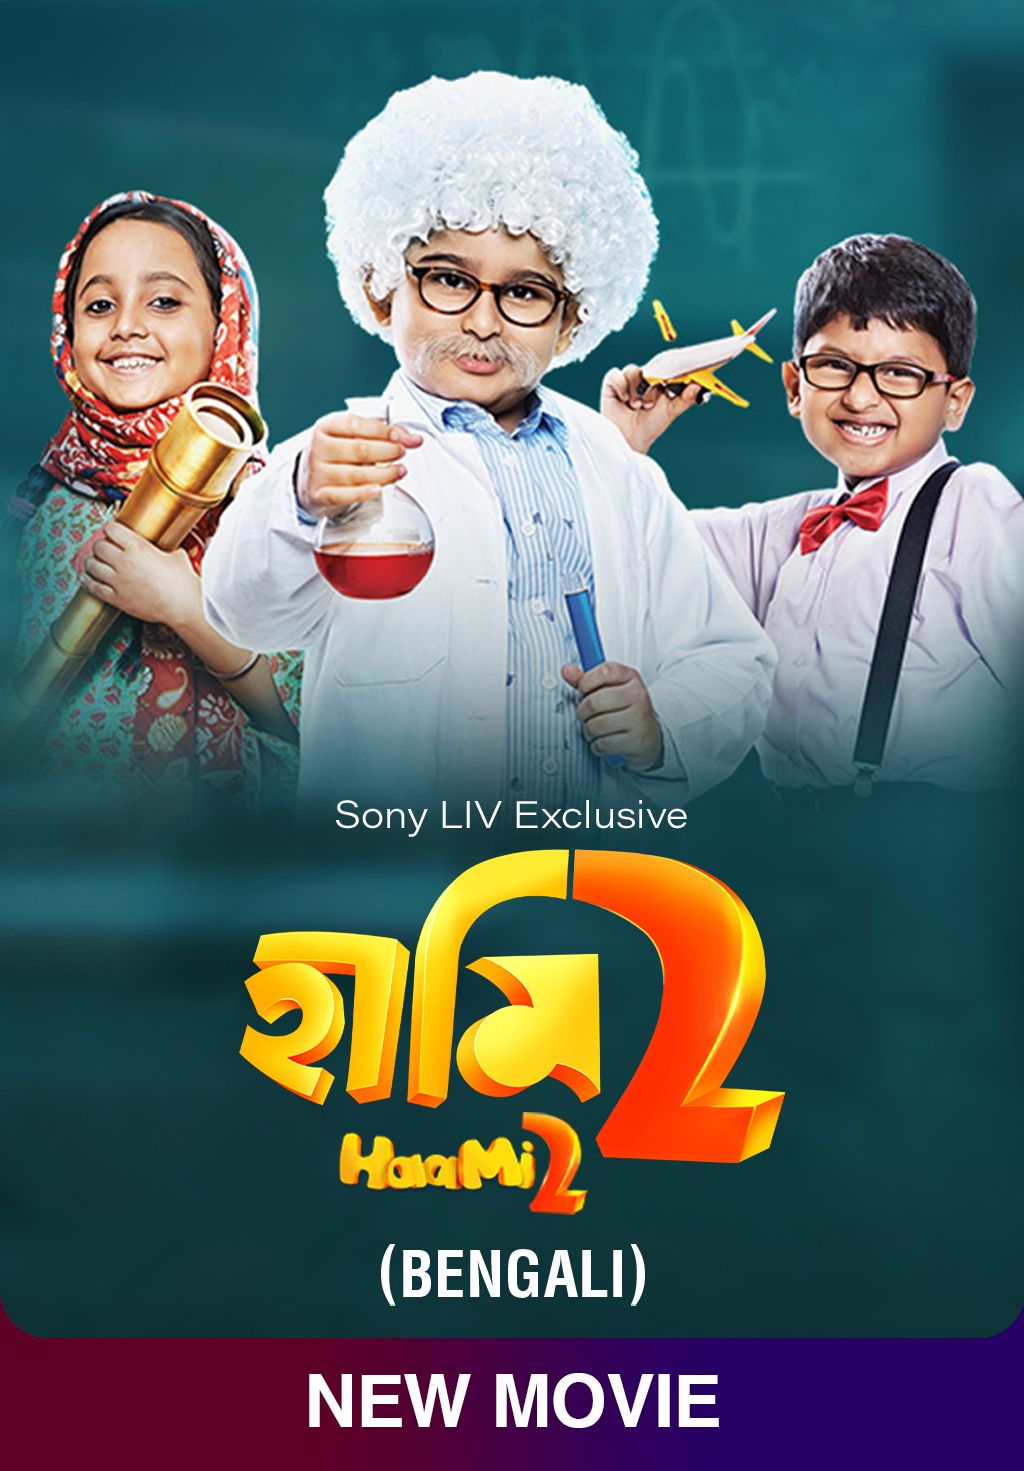 Haami 2 (Bengali)